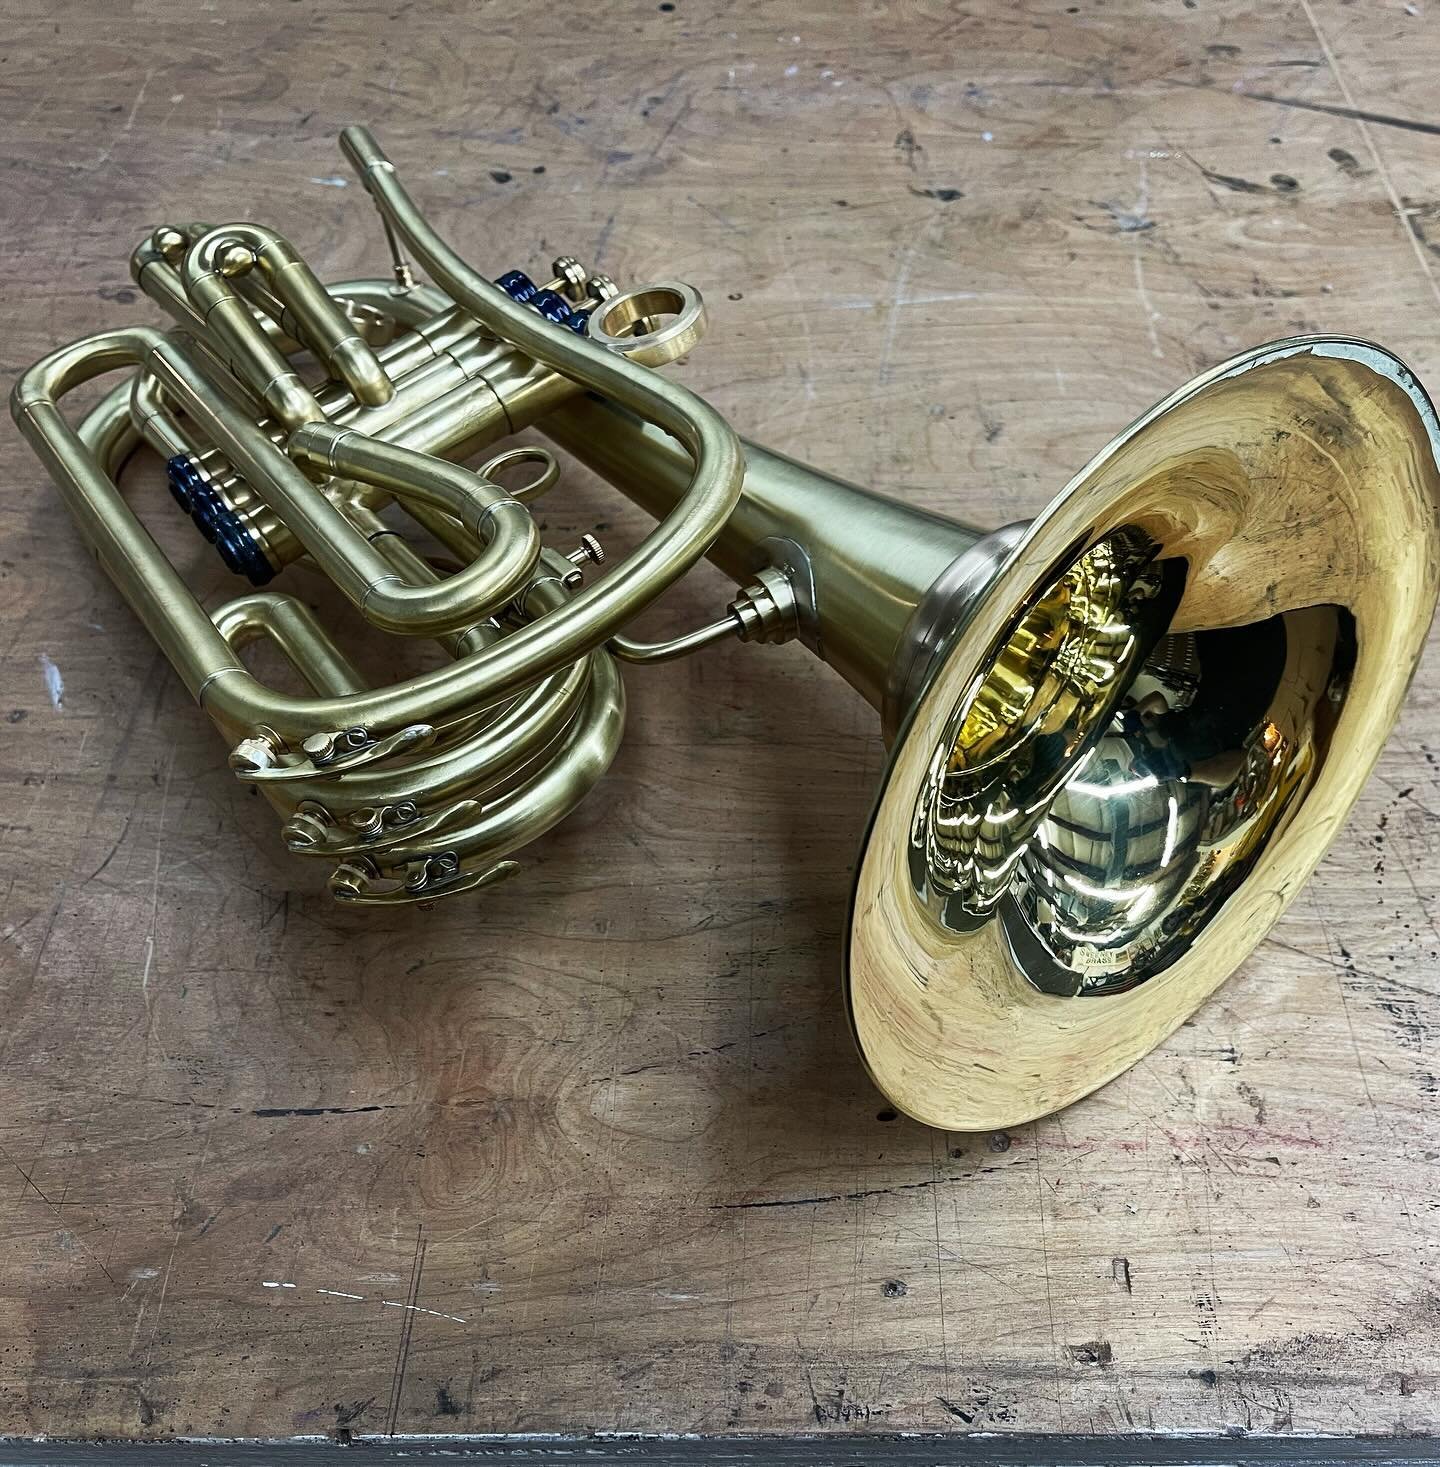 Flugabone + Blue = BluGabone? 

#SweeneyBrass
#keepitsimple 
#hoard
#strip 
#quality
#shopcat
#custom
#patina
#trombone 
#basstrombone 
#doneright 
#modification
#rebuild
#custom
#refurbish
#flugabone
#tuba
#trombone
#euphonium
#tarnish
#mouthpiece
#